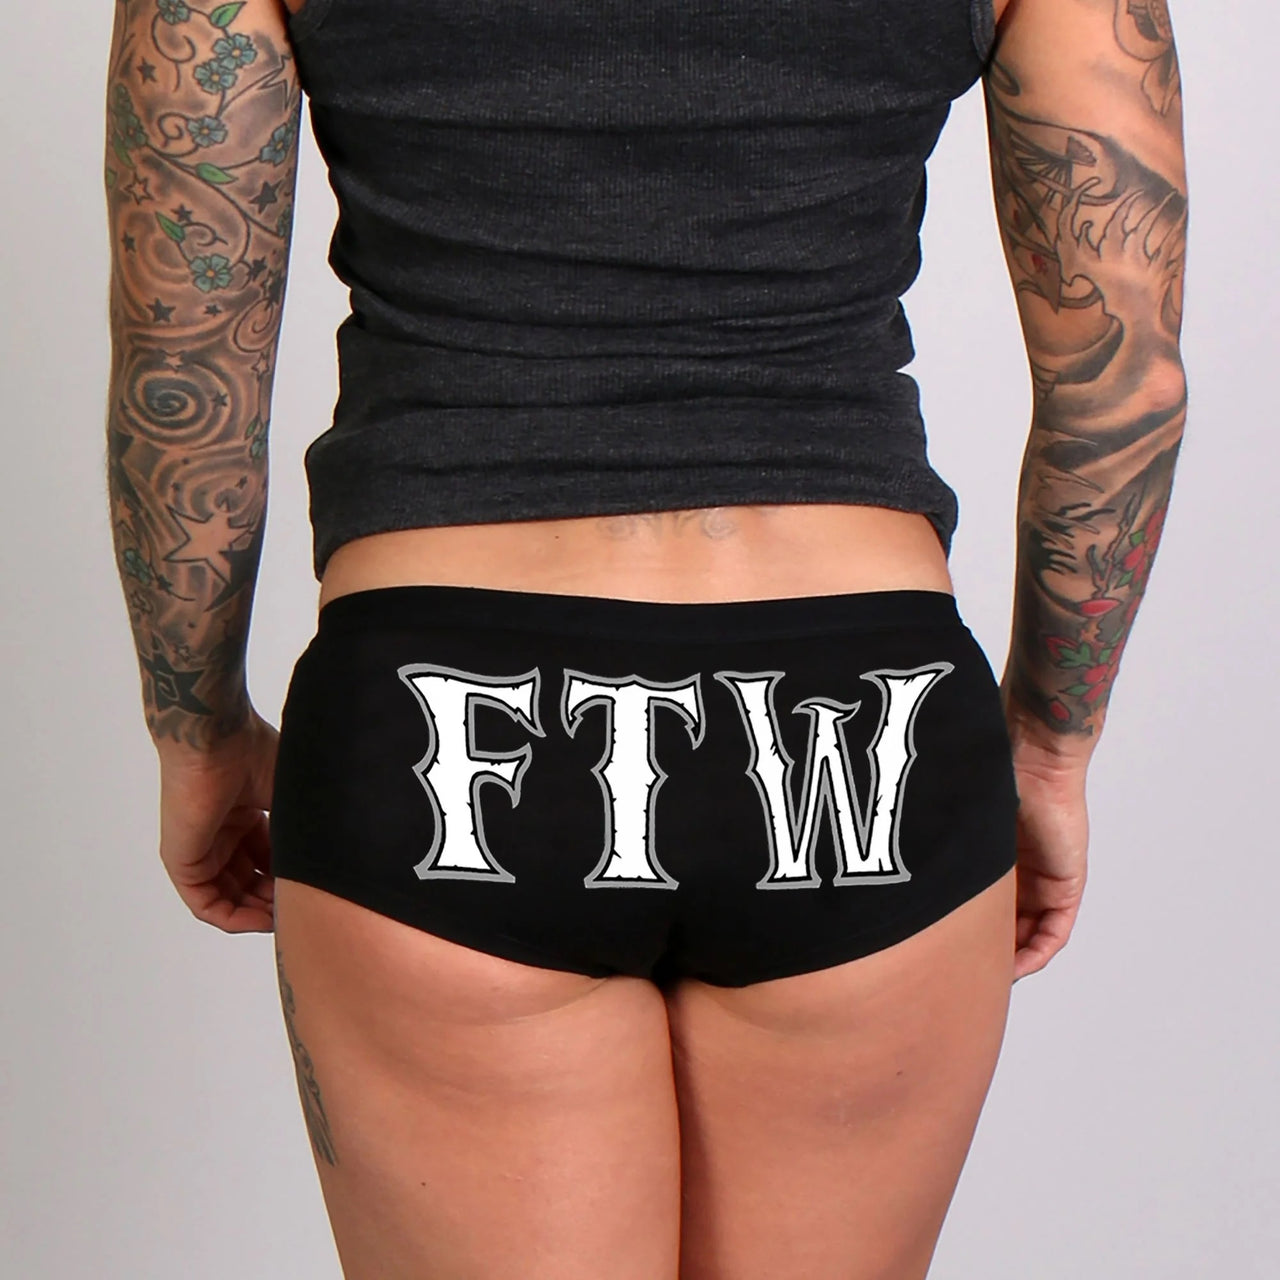 PTB7473 FTW Ladies Boy Shorts - HighwayLeather